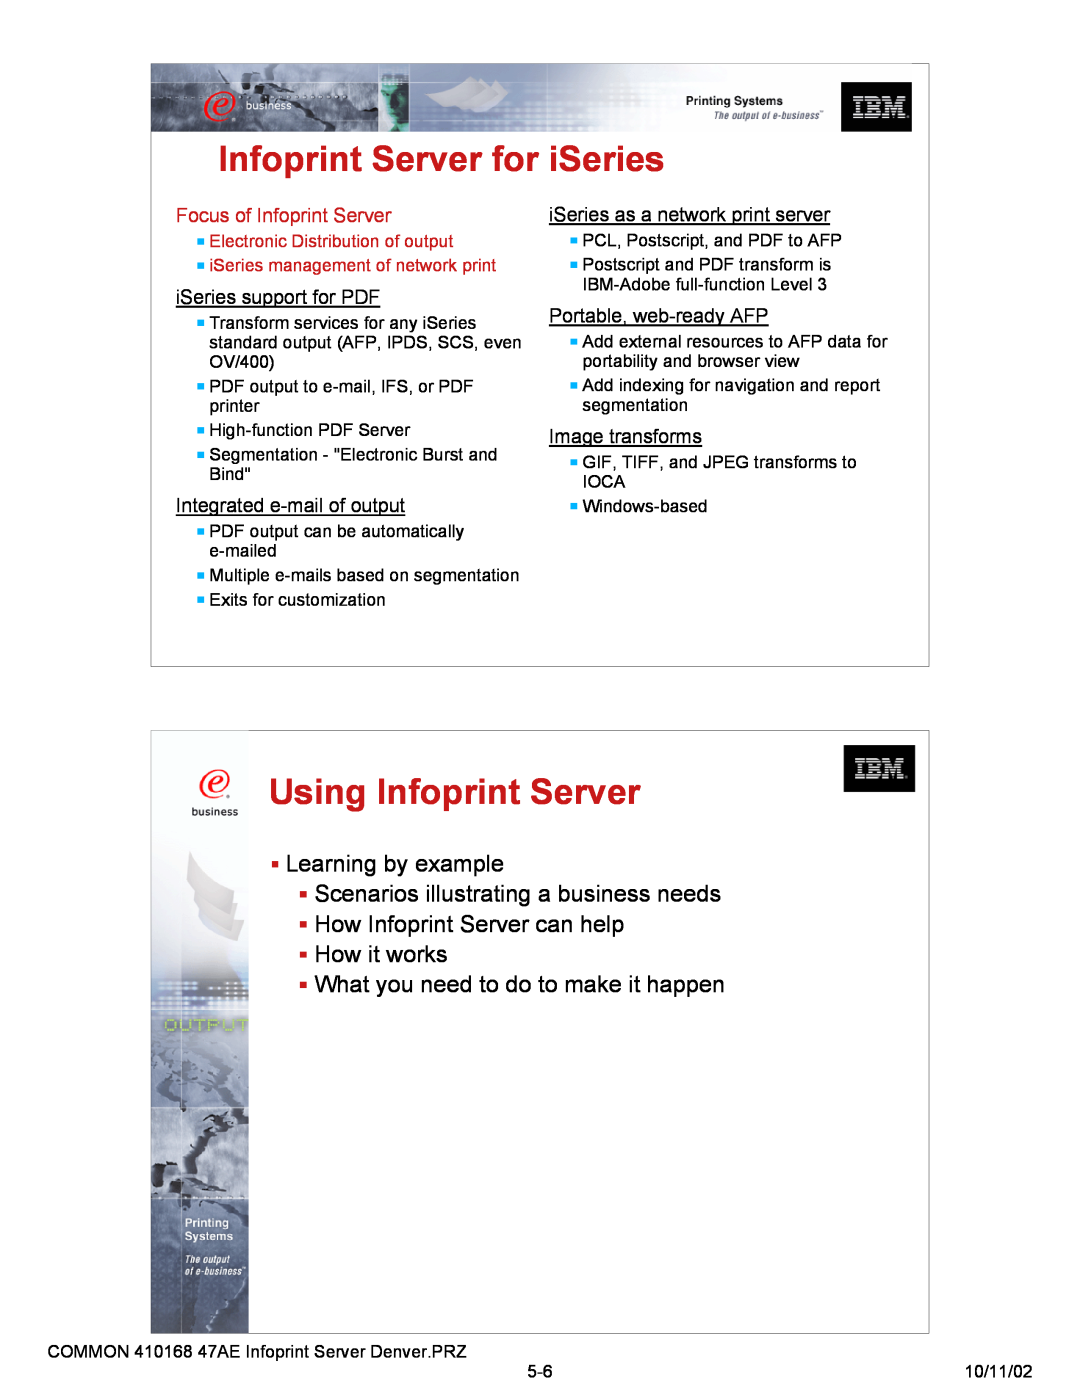 IBM 47AE - 410168 Using Infoprint Server, Infoprint Server for iSeries, Focus of Infoprint Server, iSeries support for PDF 